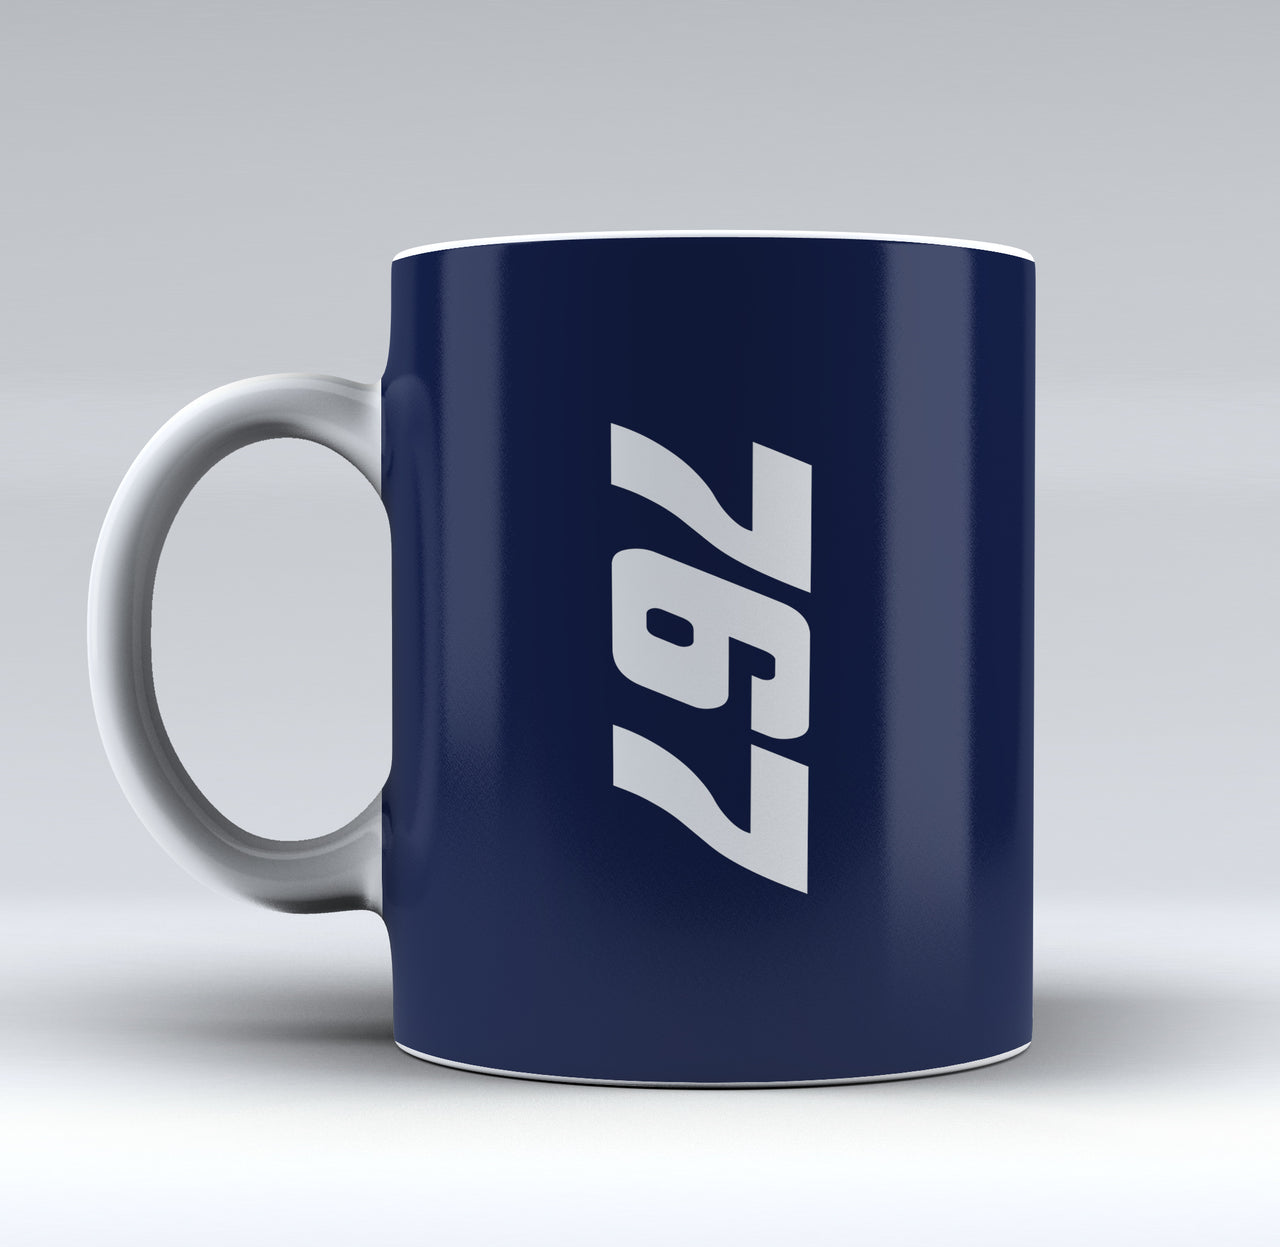 767 Text Side Designed Mugs